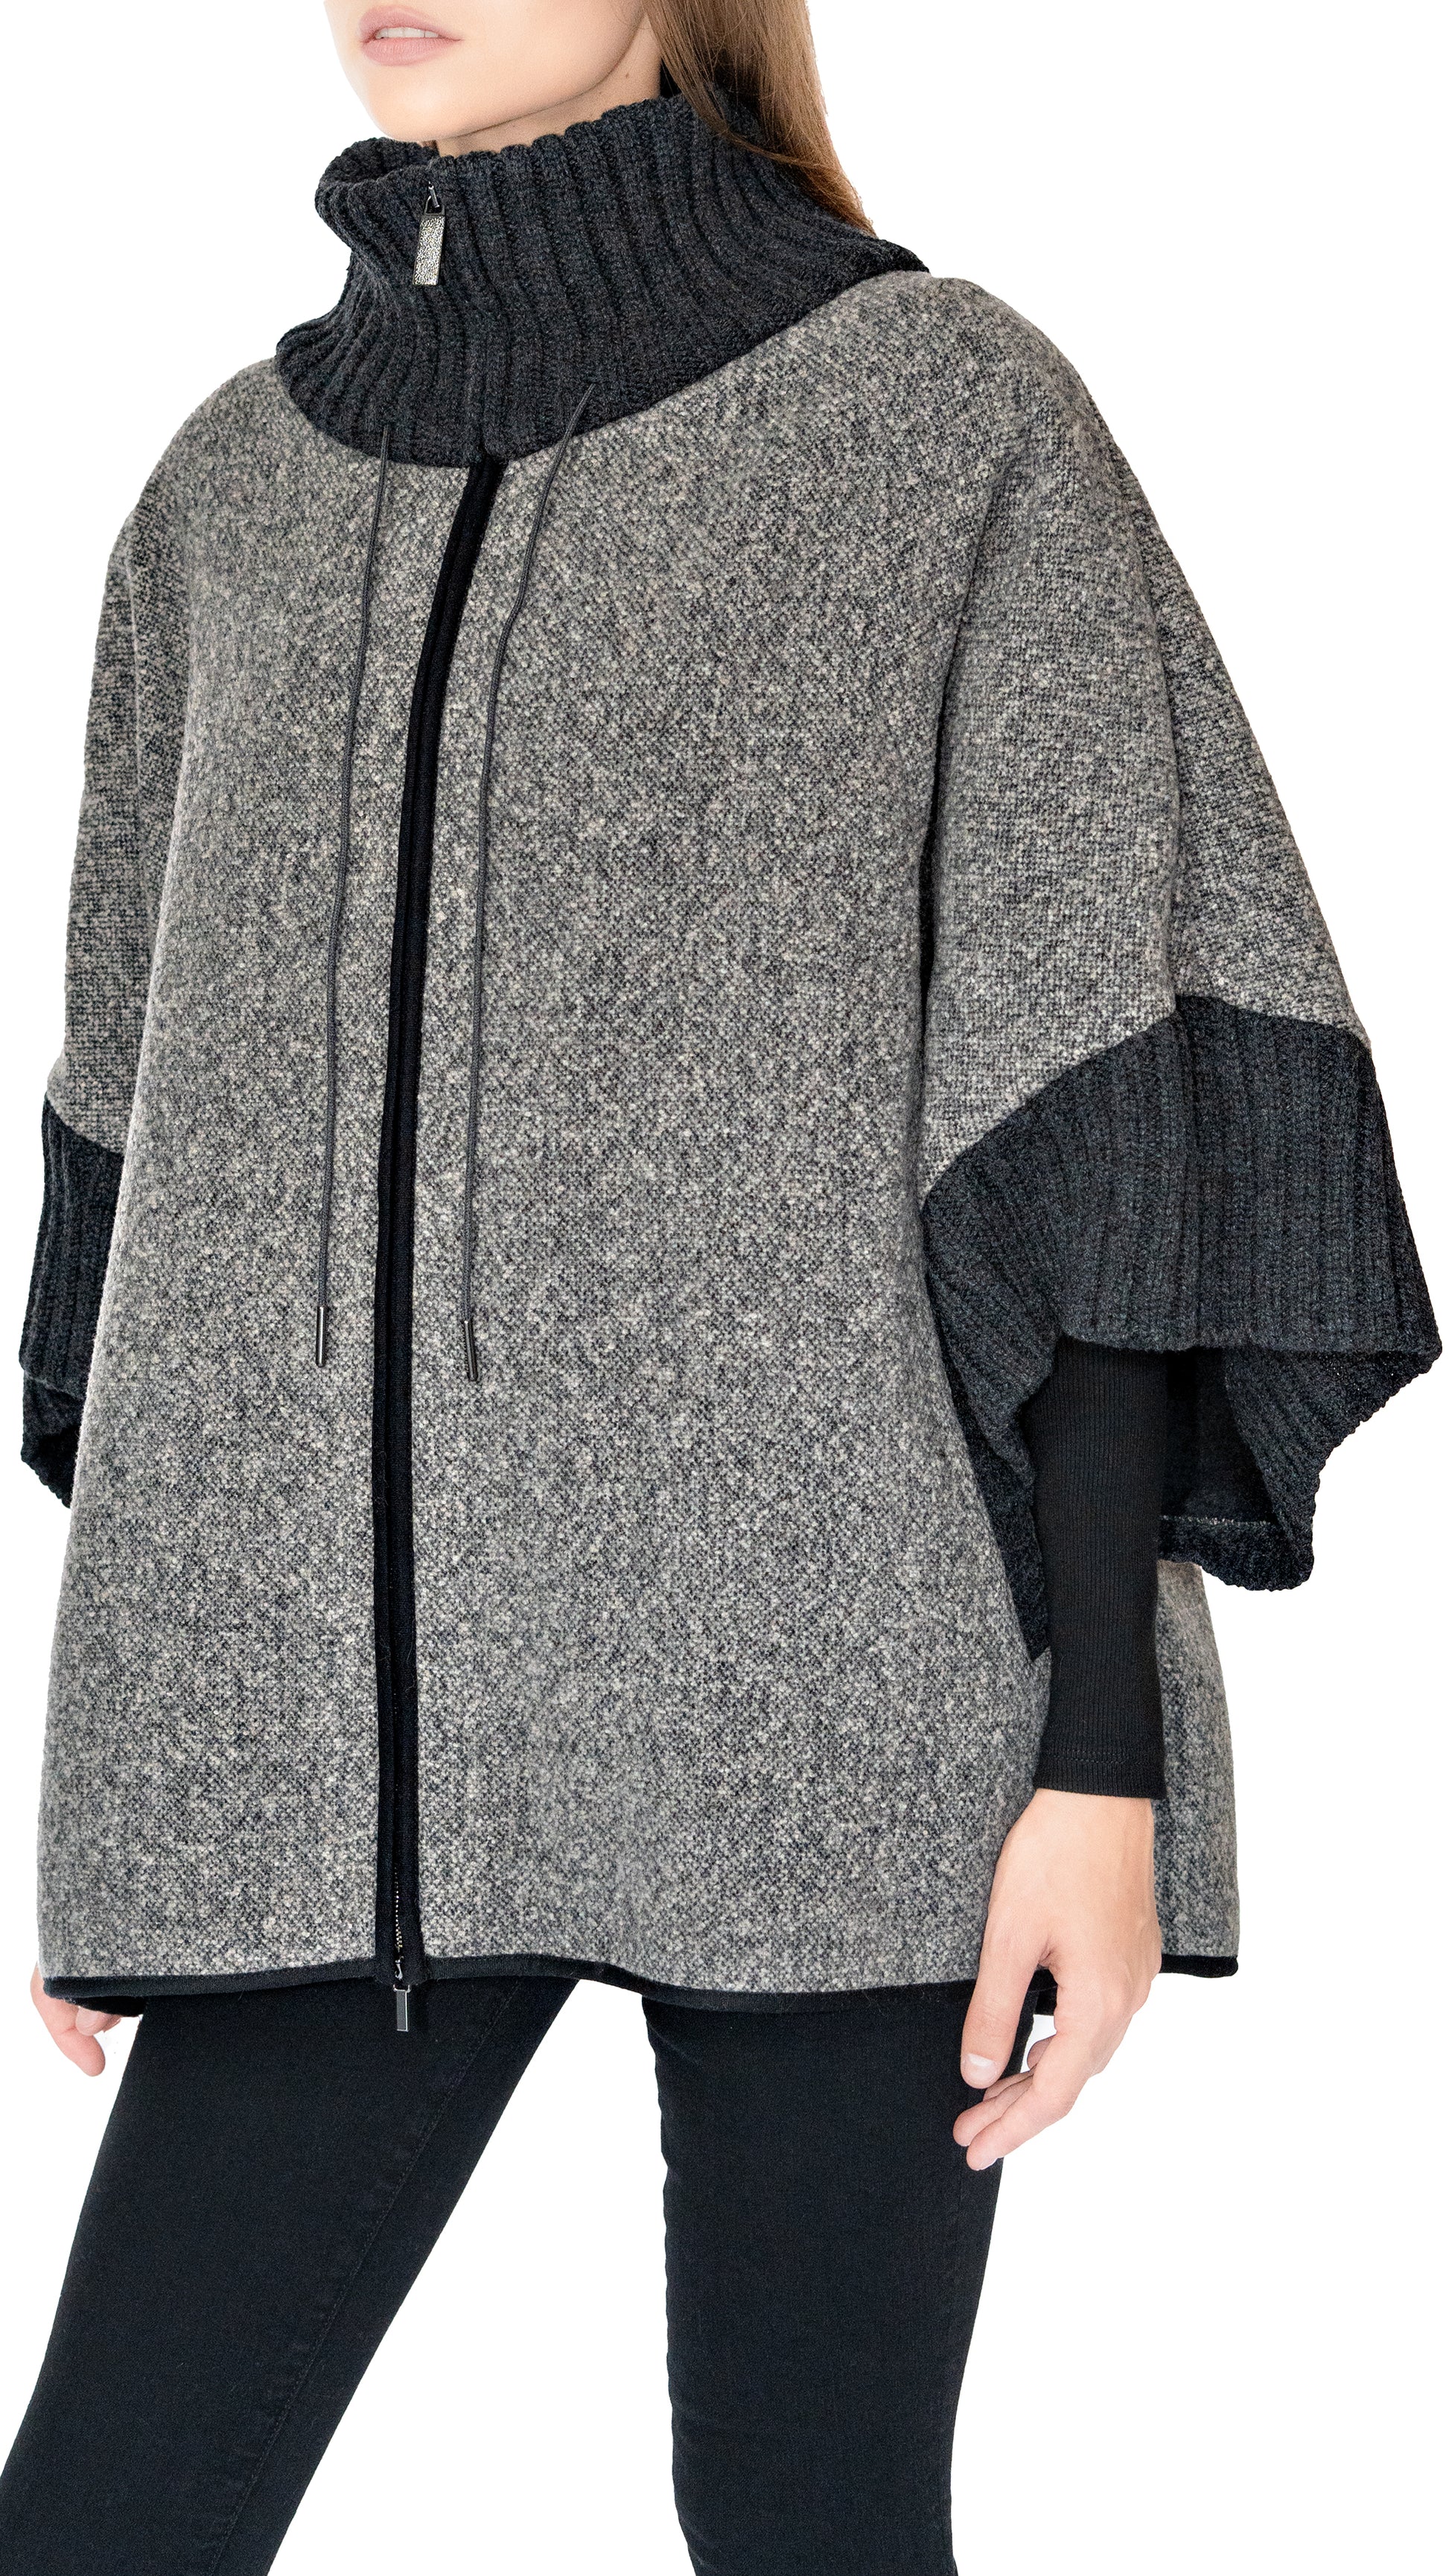 Fabiana Filippi grey cape with black knit details 